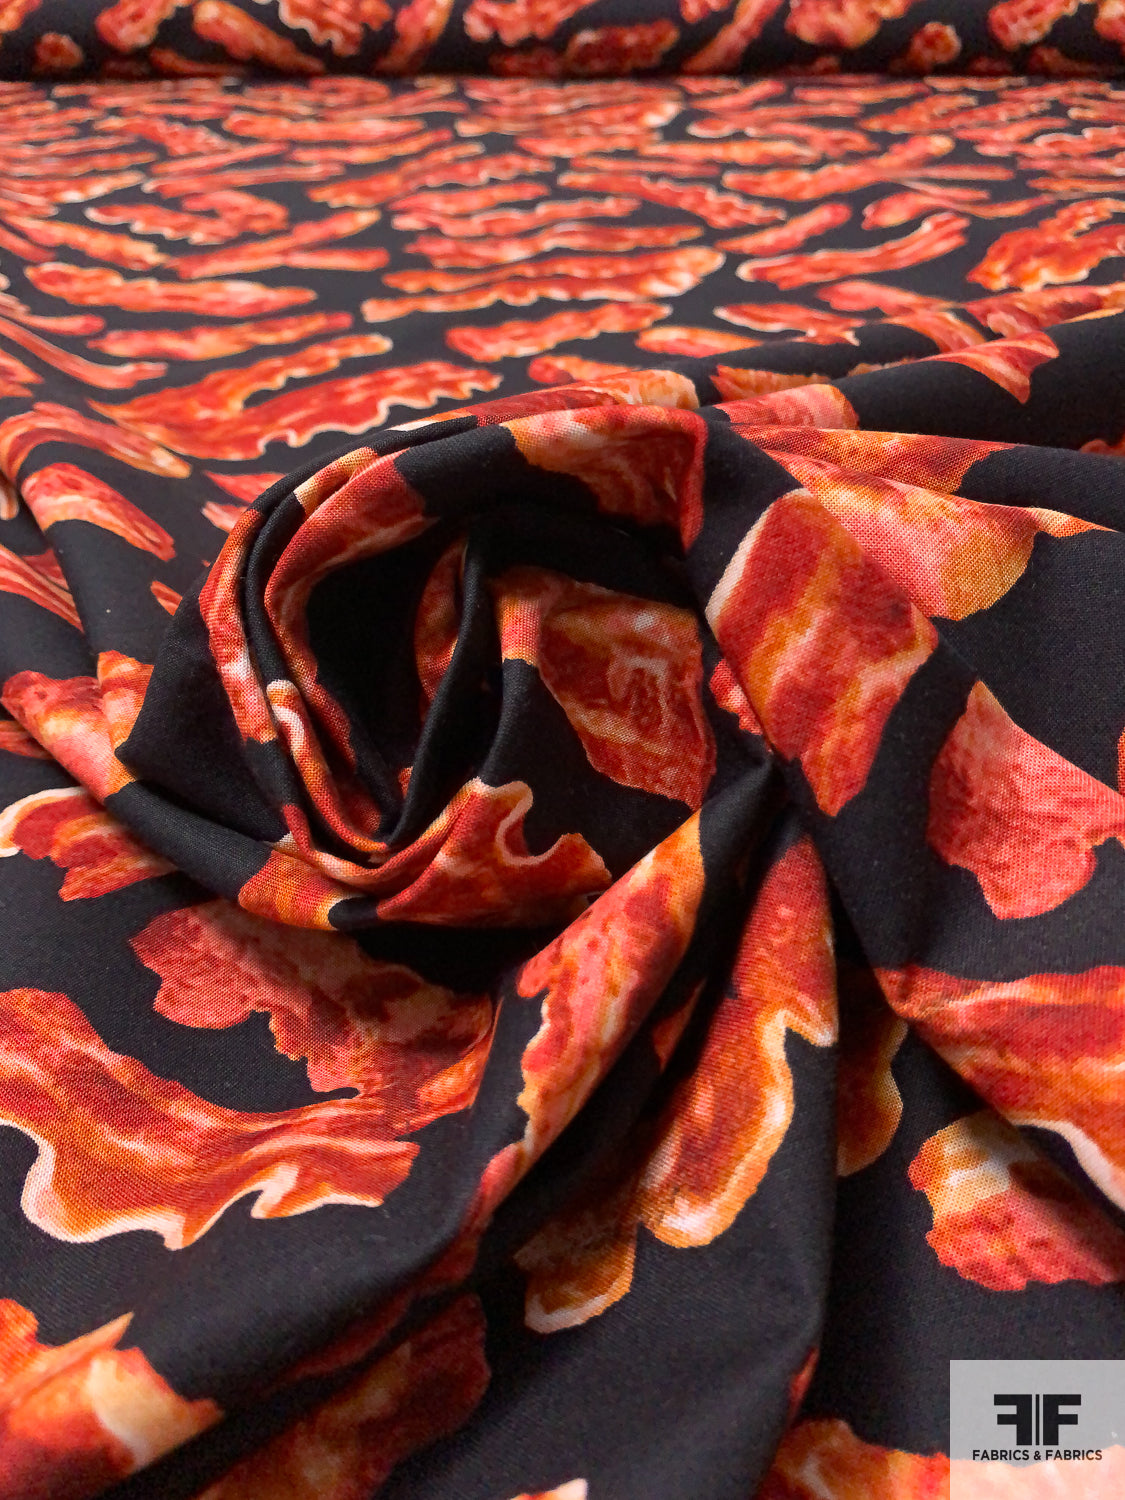 Bacon Printed Fused Cotton Lawn - Burnt Orange / Brick / Black